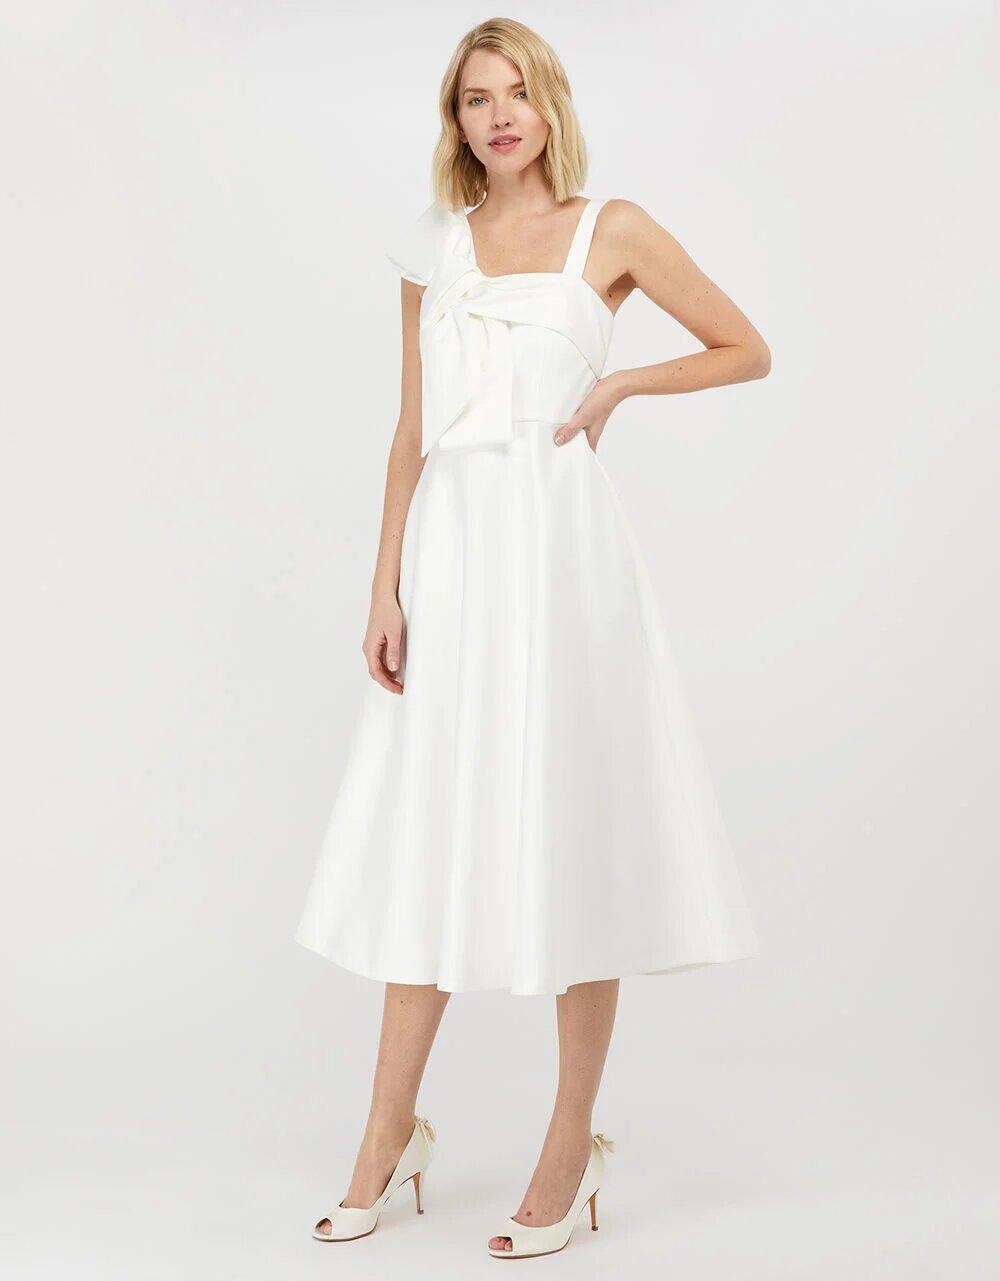 Model wearing a white bow bridal dress